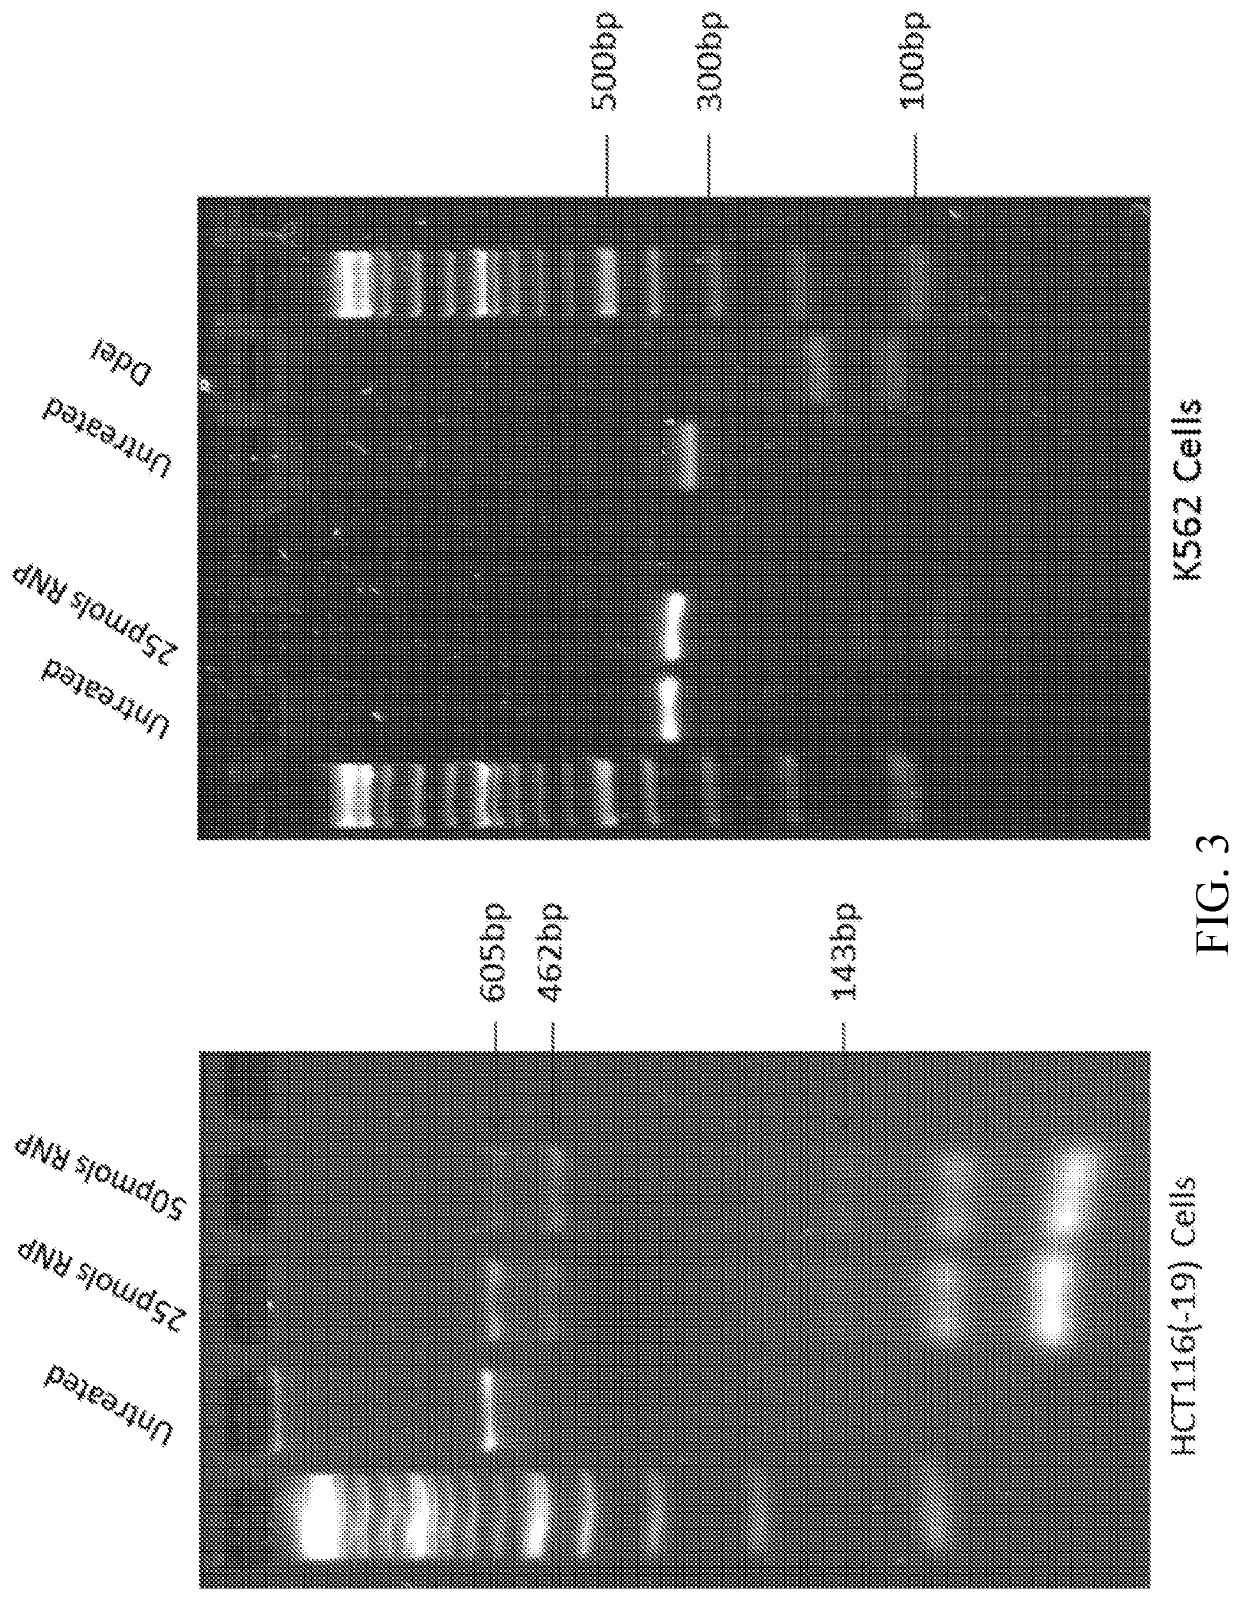 Methods for in vitro site-directed mutagenesis using gene editing technologies